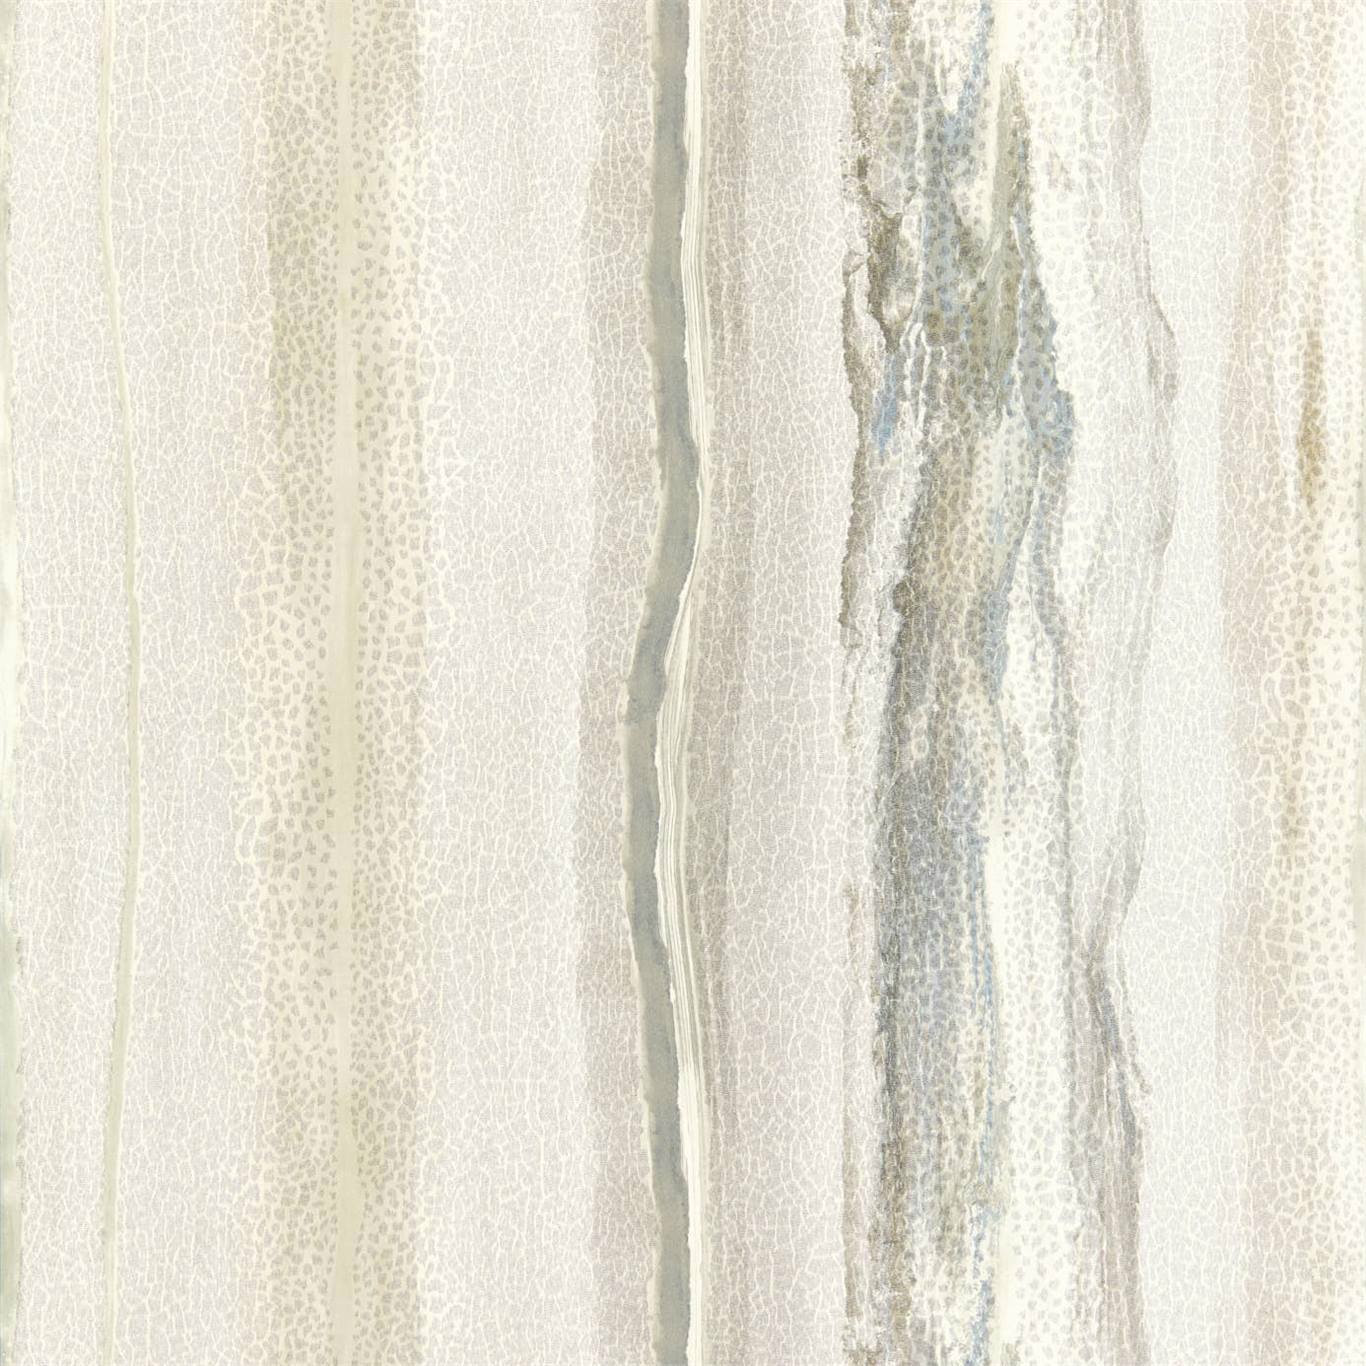 Anthology Vitruvius Limestone / Concrete Wallpaper by HAR